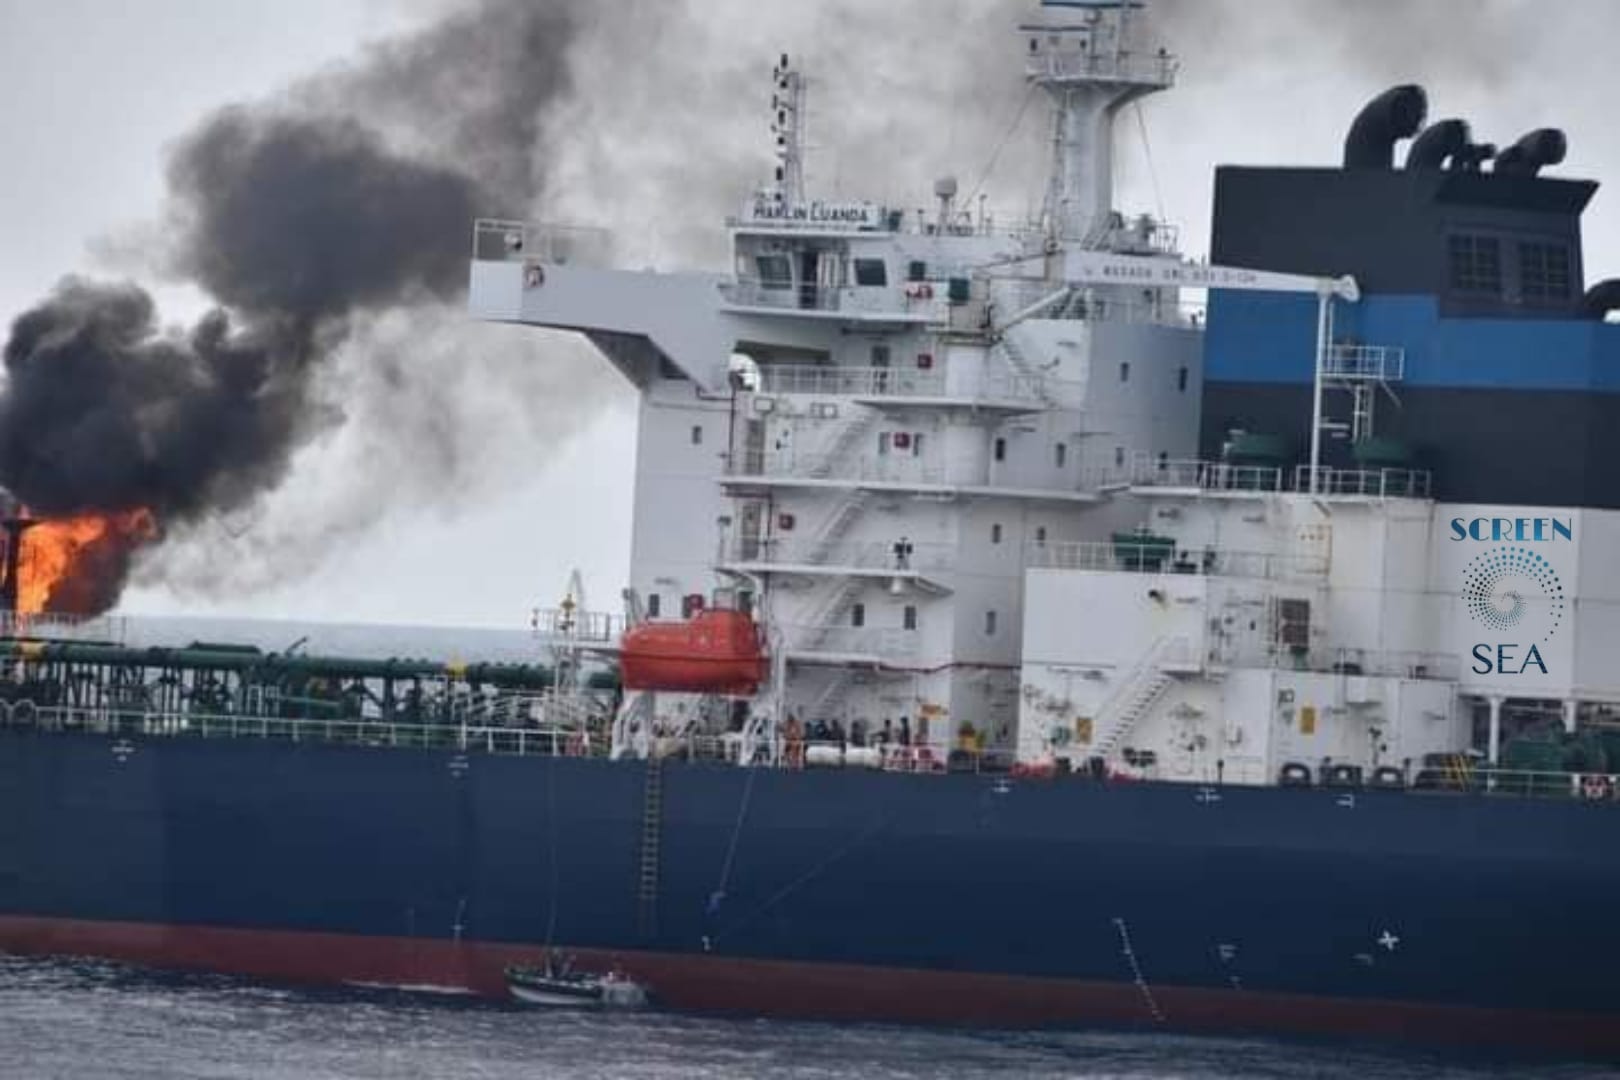 Houthi bedil kapal tangki berdaftar di UK